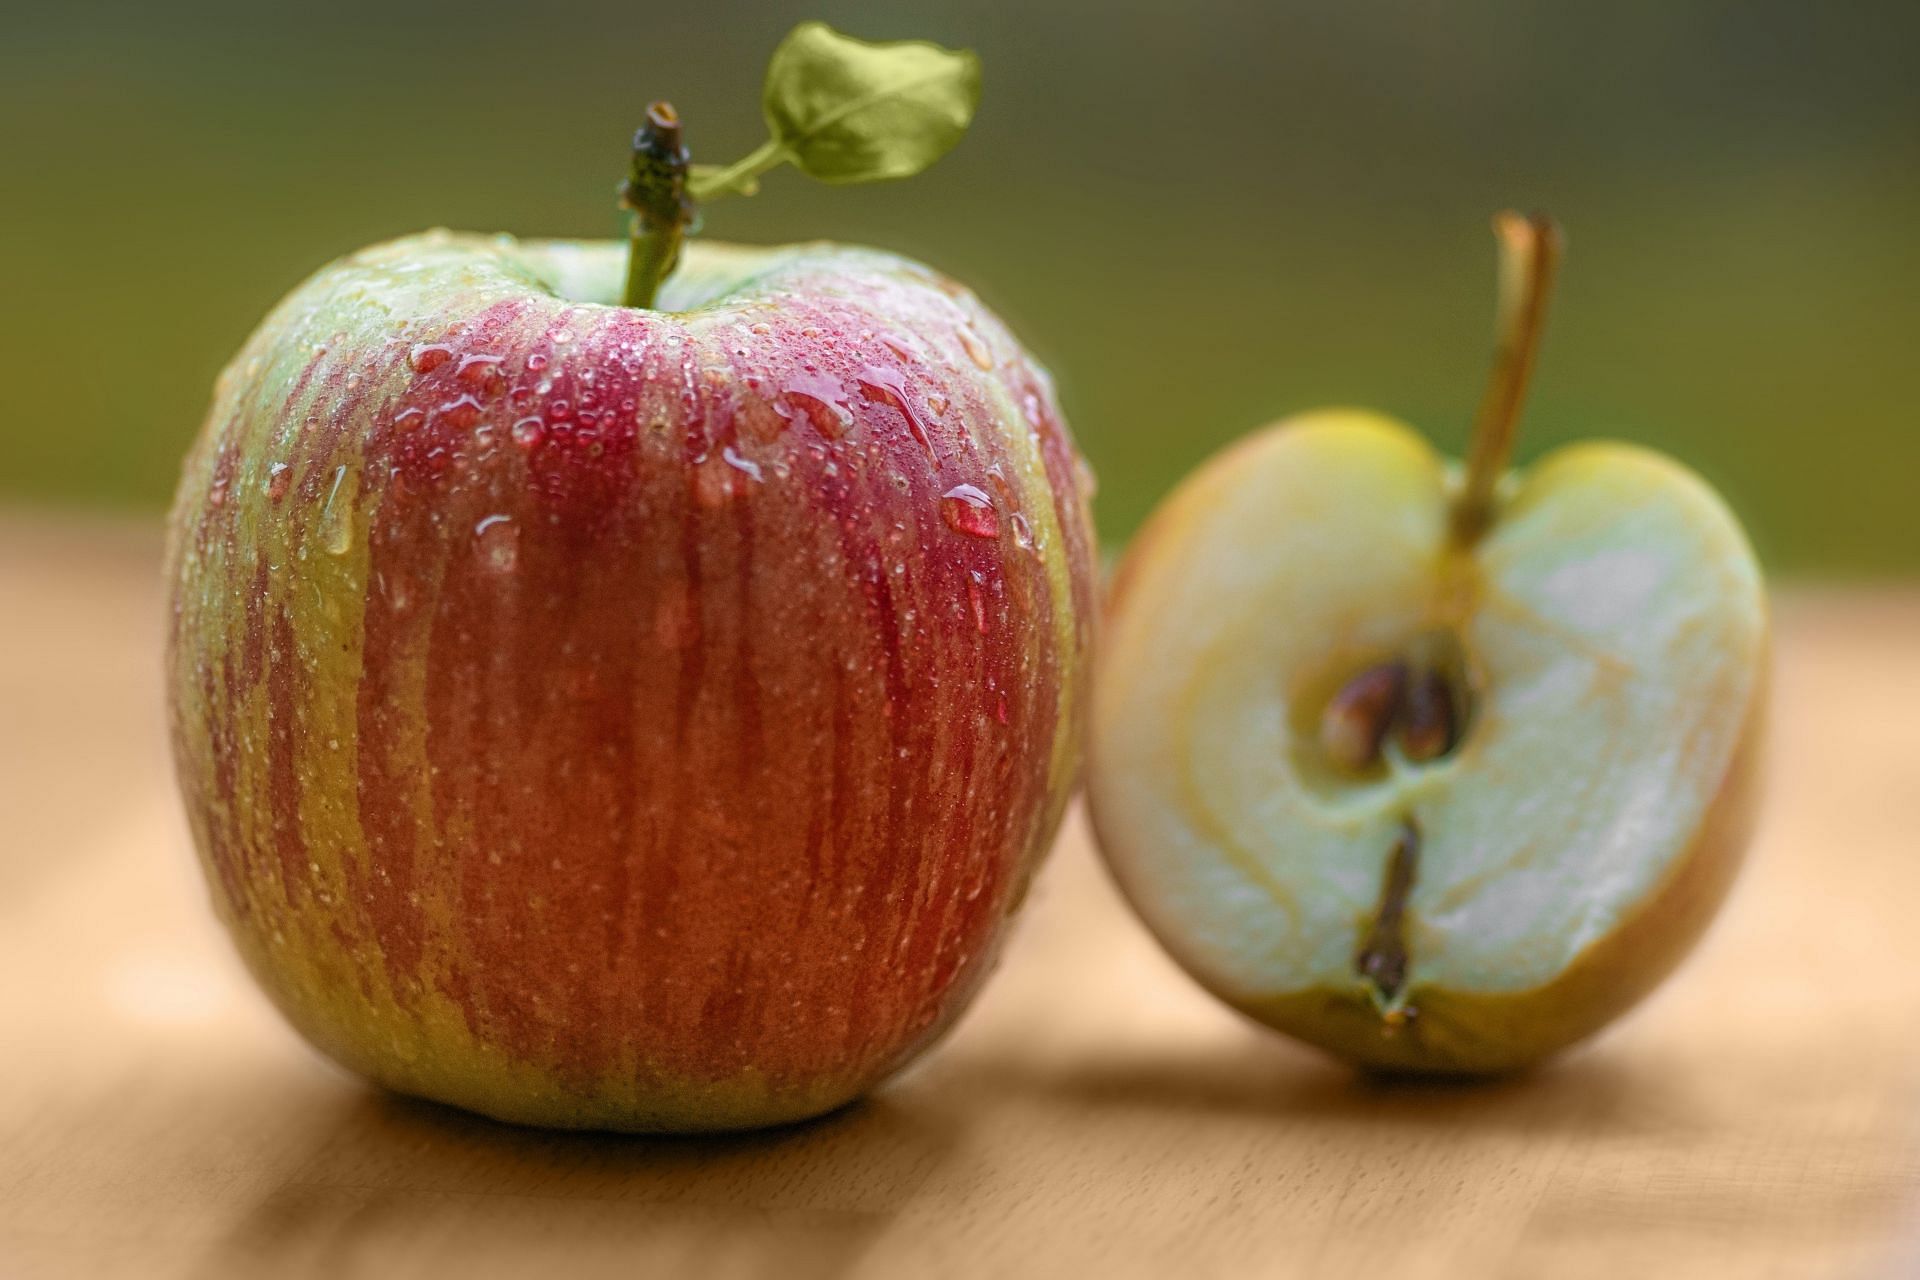 Apple cider vinegar can be a good natural remedy for acne (Image via Pexels @Mali Maeder)